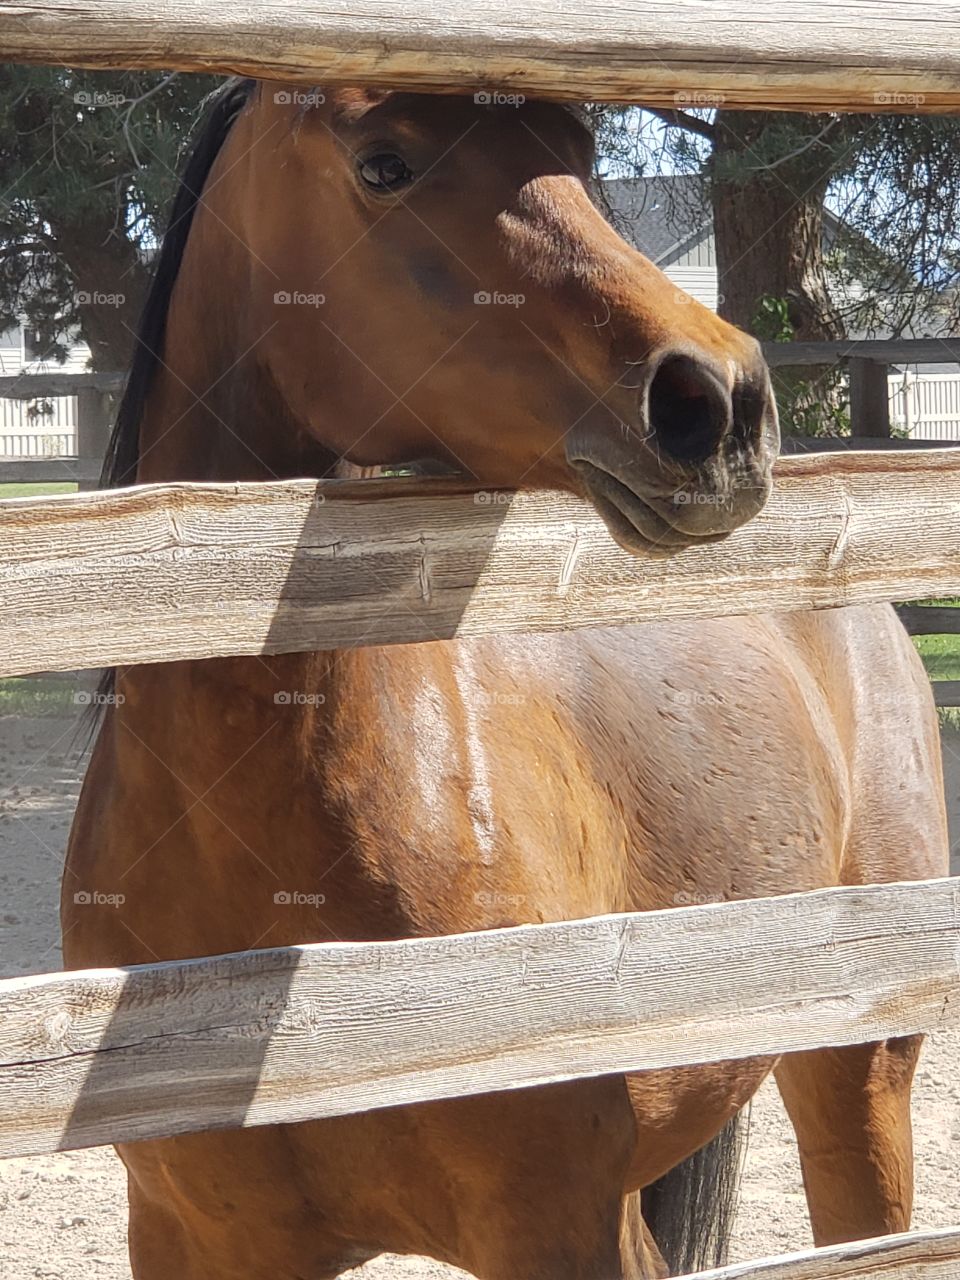 nostrils muzzle Arabian horse dishy face